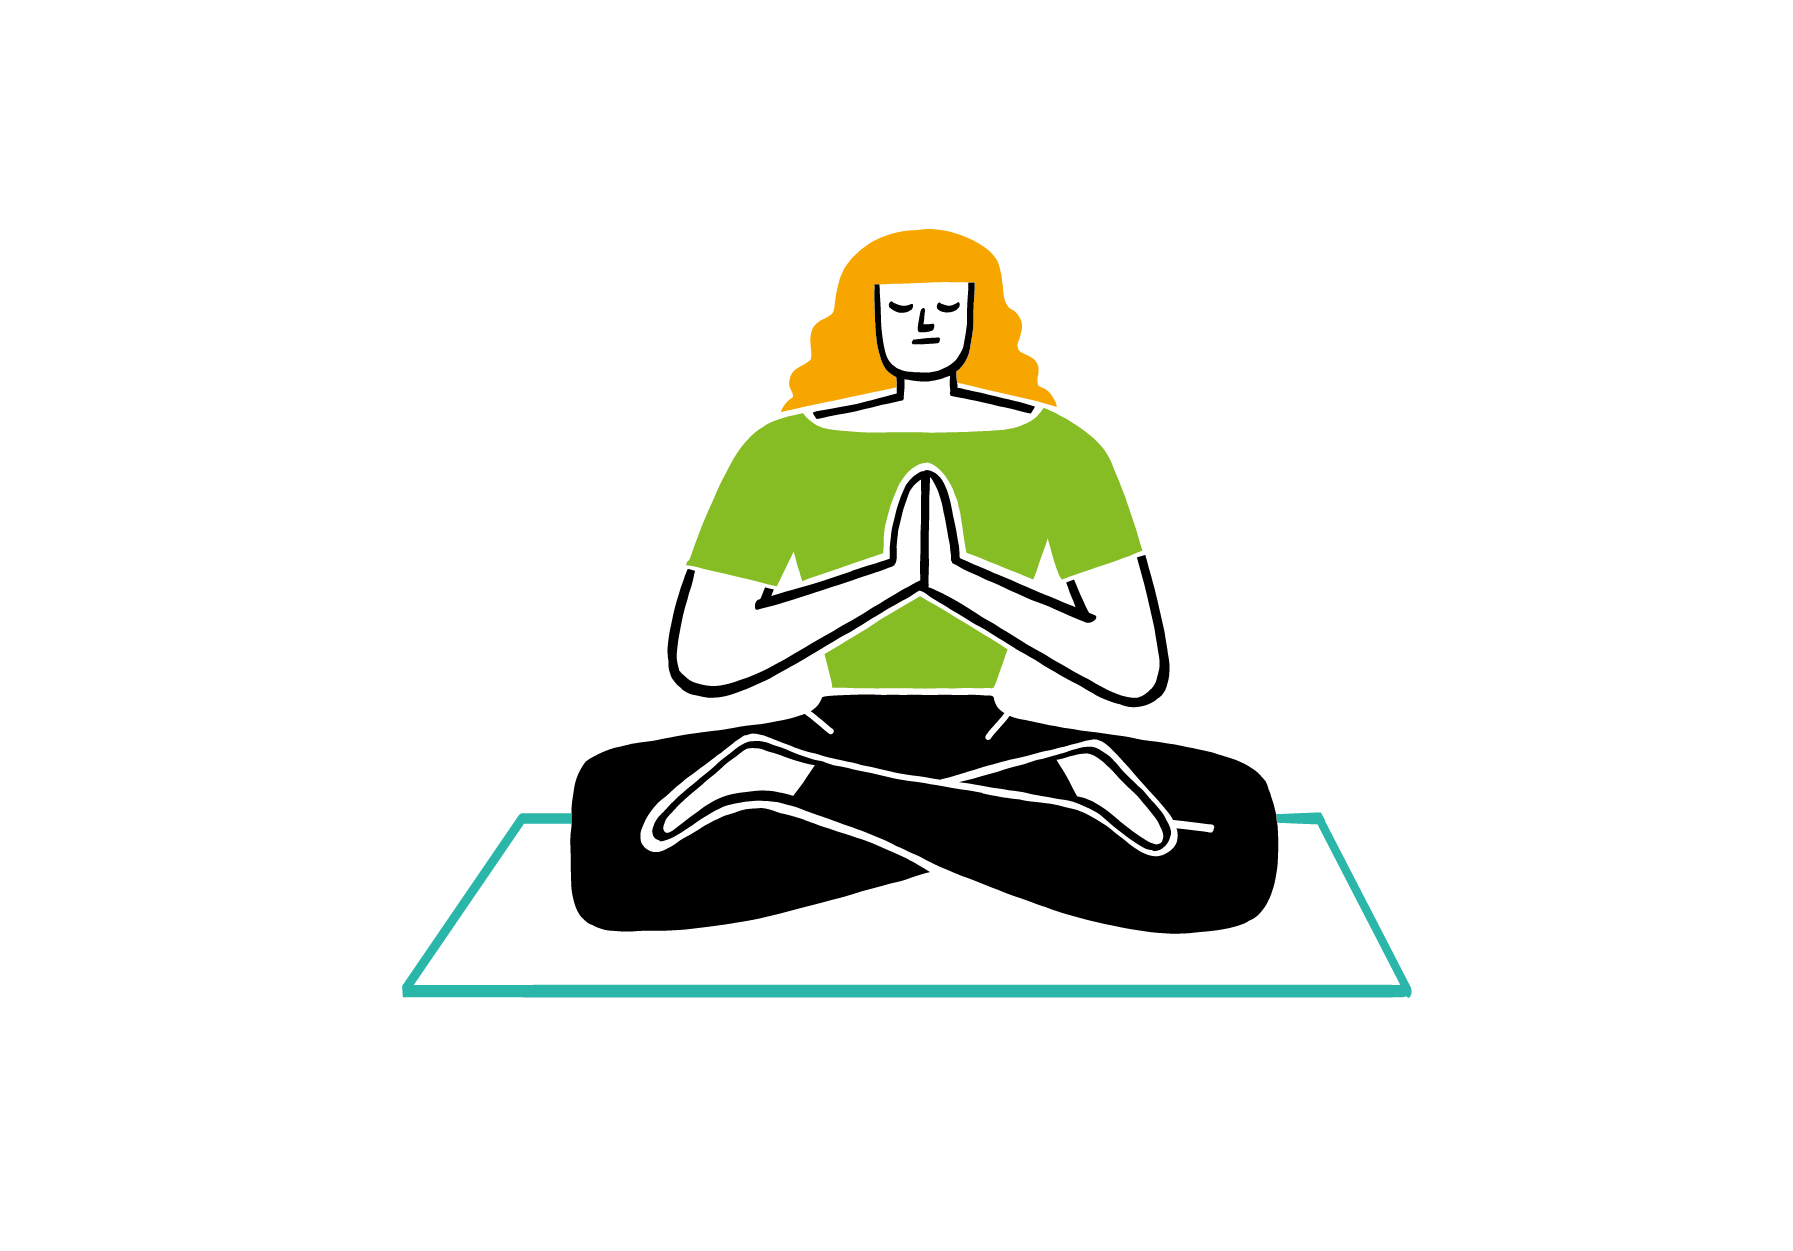 illustration yoga